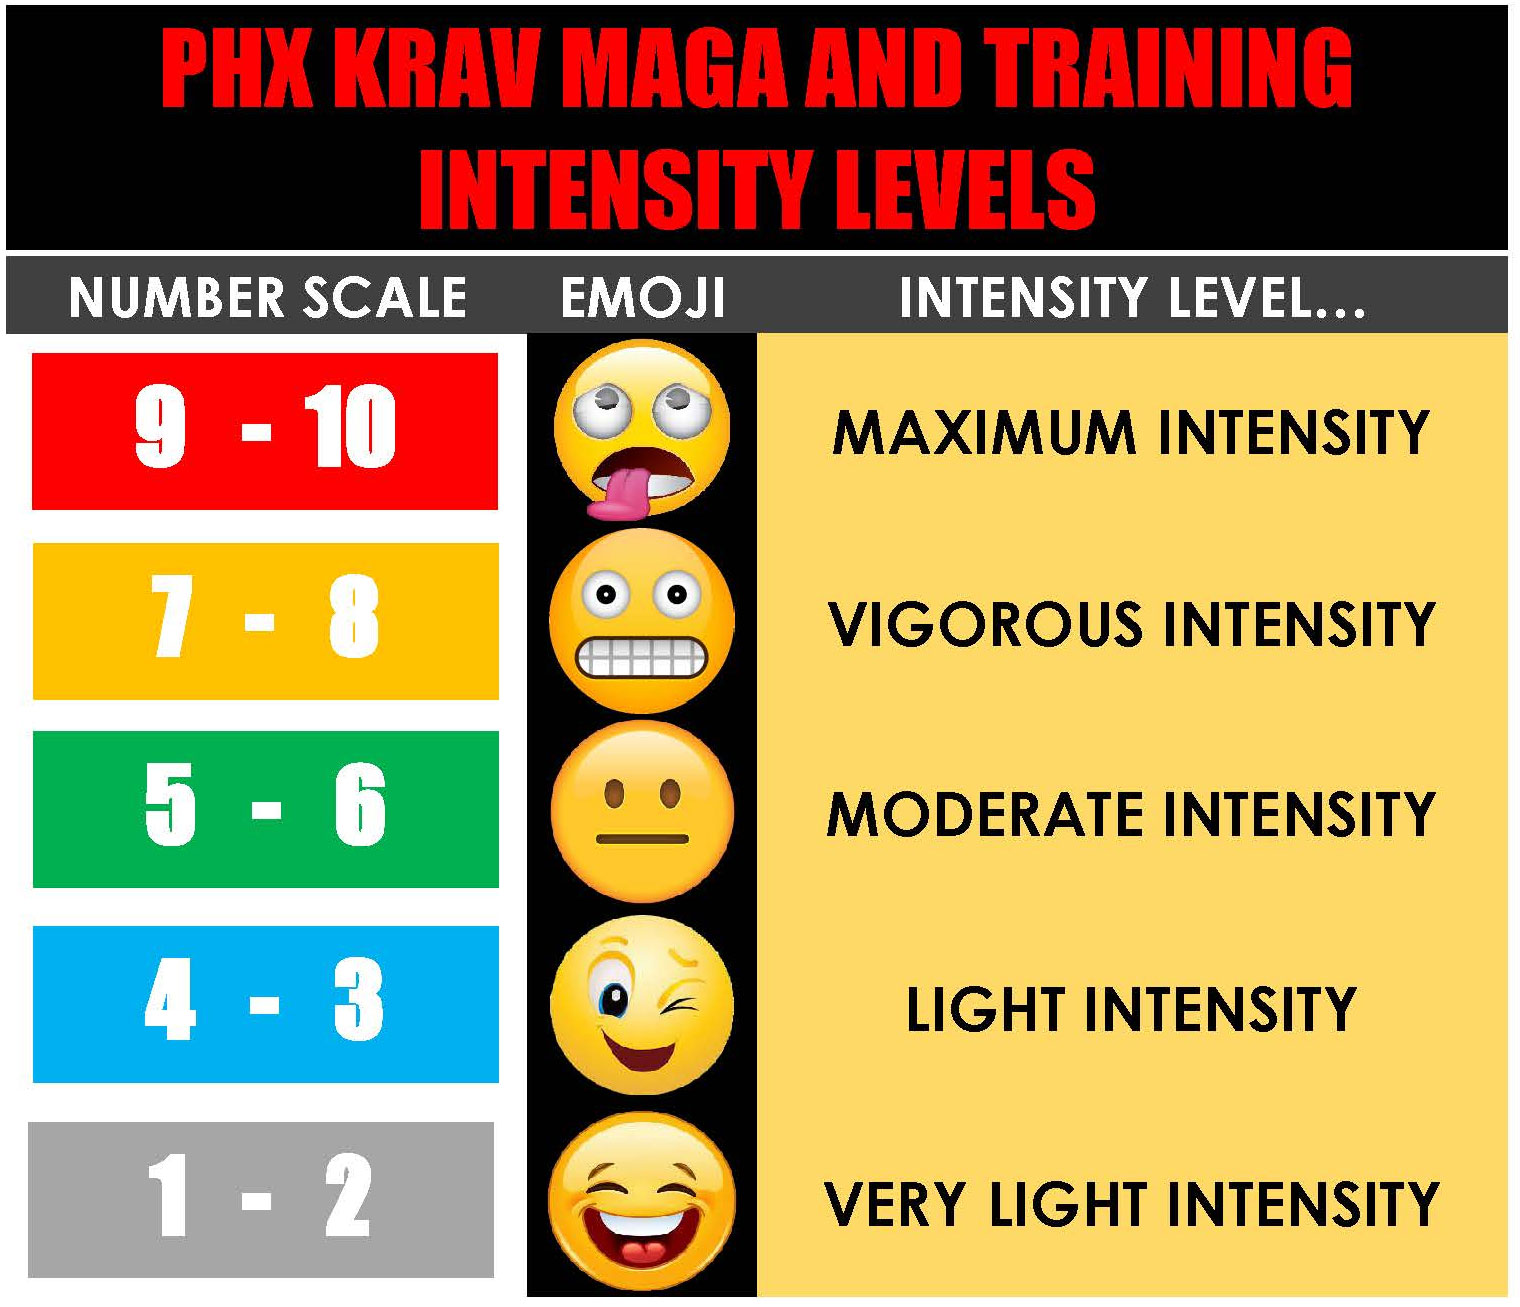 phx-krav-maga-and-training-intensity-levels